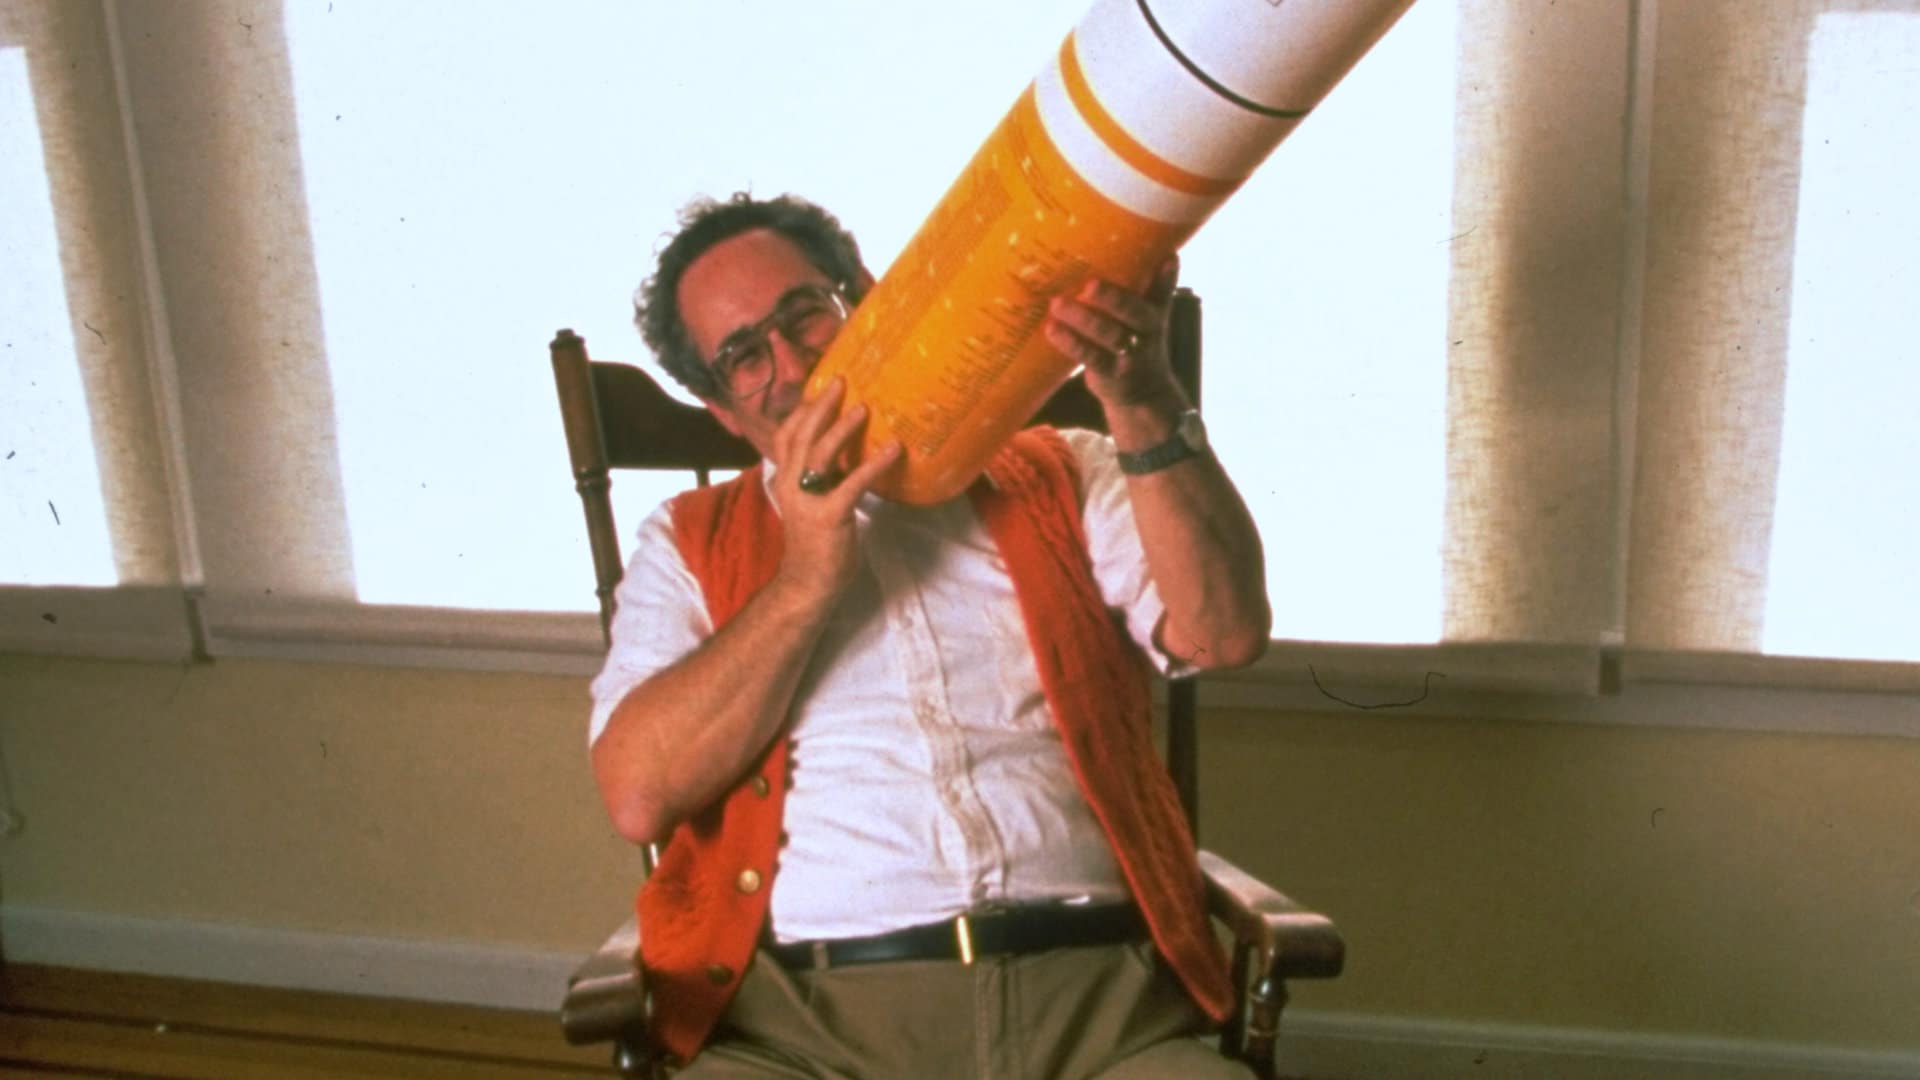 Anti-tobacco researcher and activist, Stanton Glantz, poses with a giant cigarette in 1996.